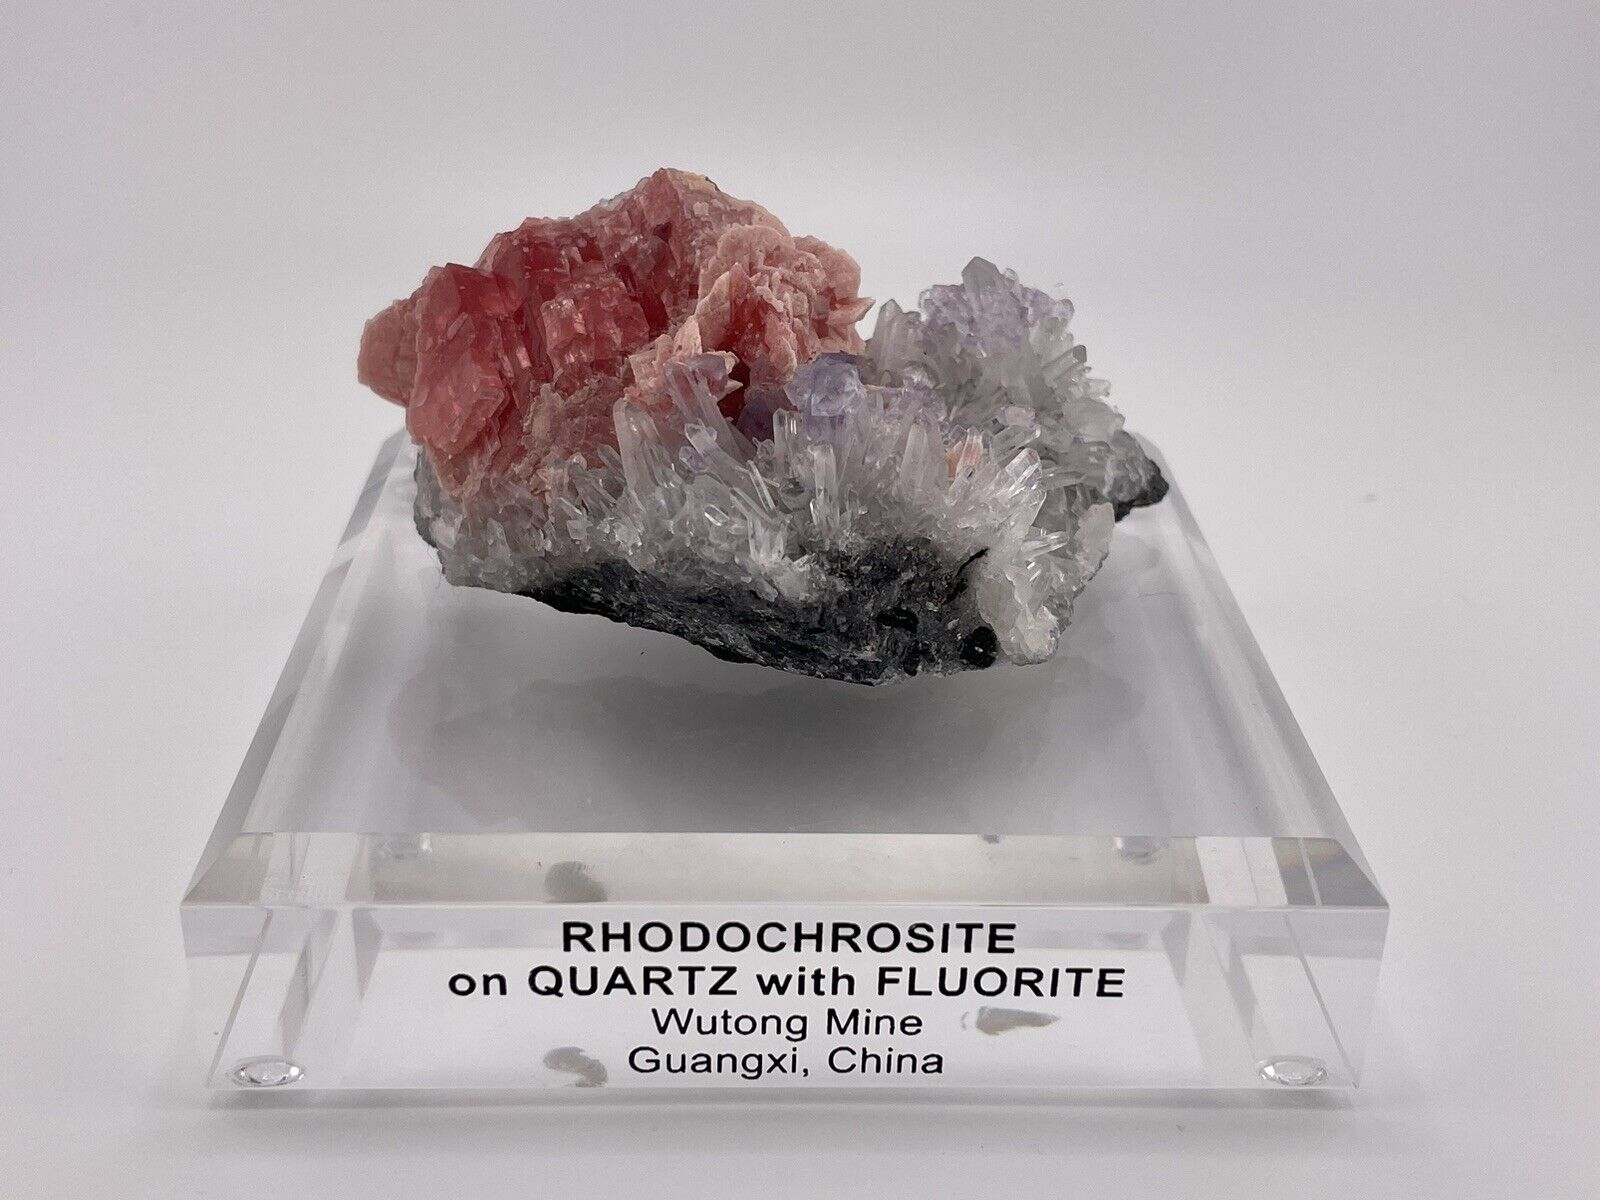 Rhodochrosite on Quartz with Fluorite - Guangxi, China